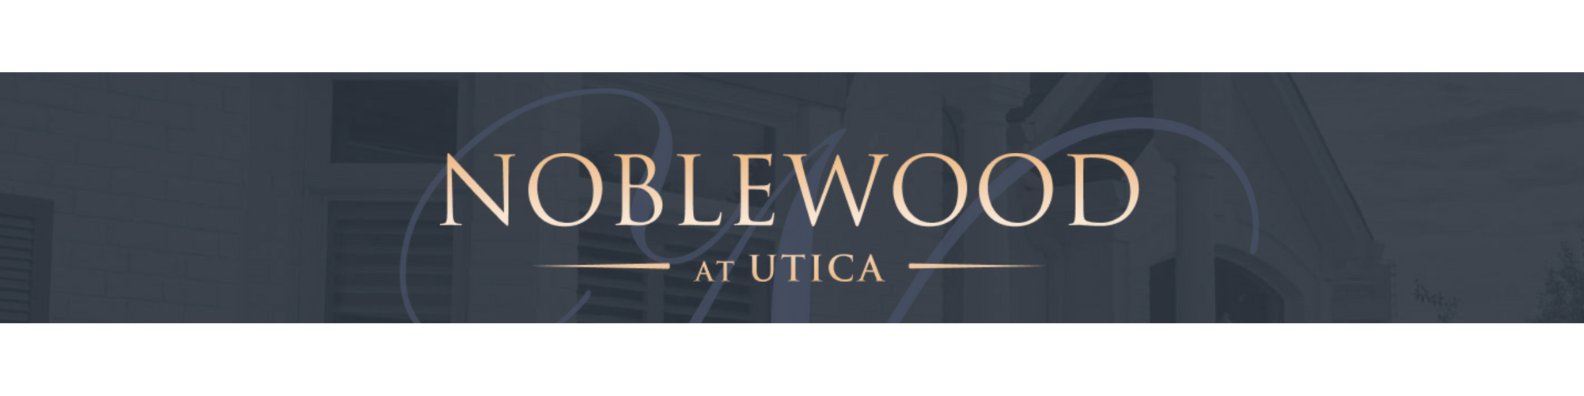 Noblewood at Utica